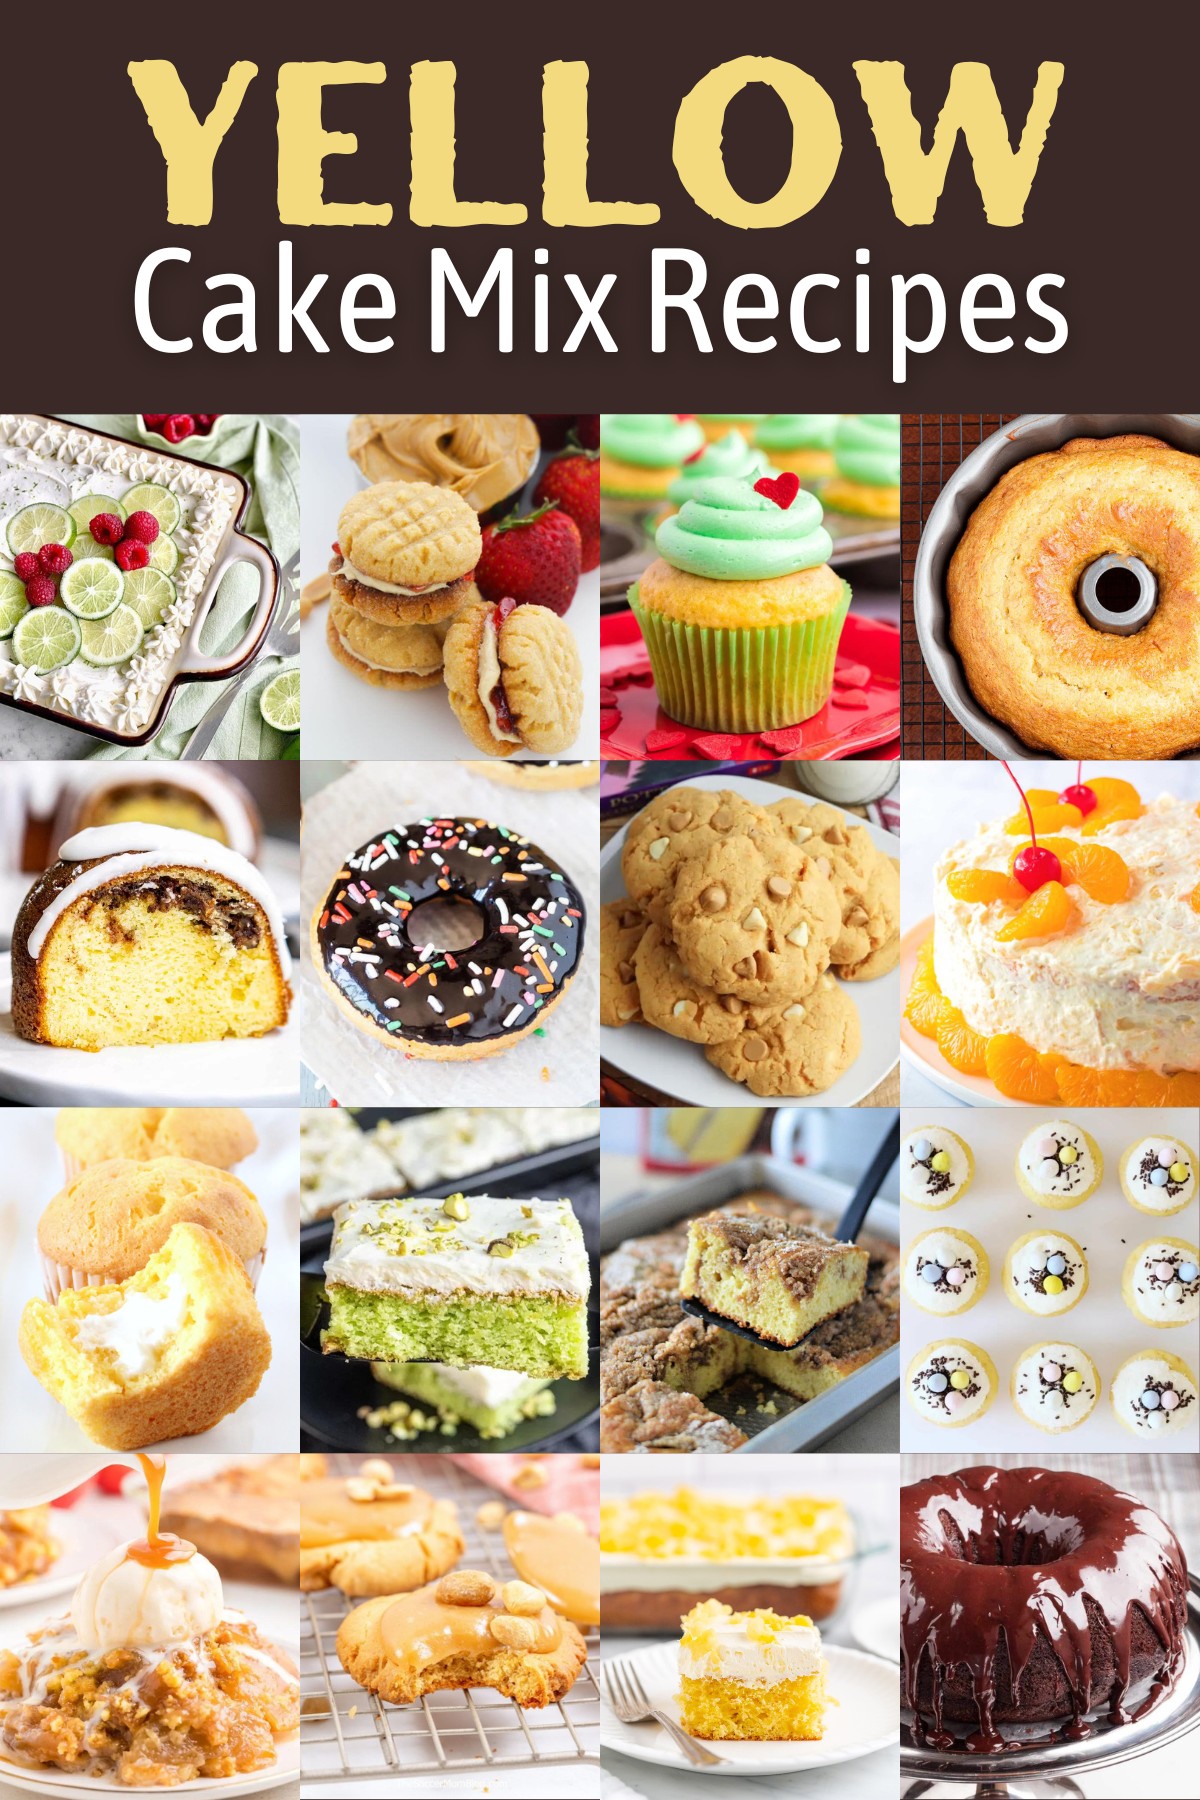 recipes using yellow cake mix